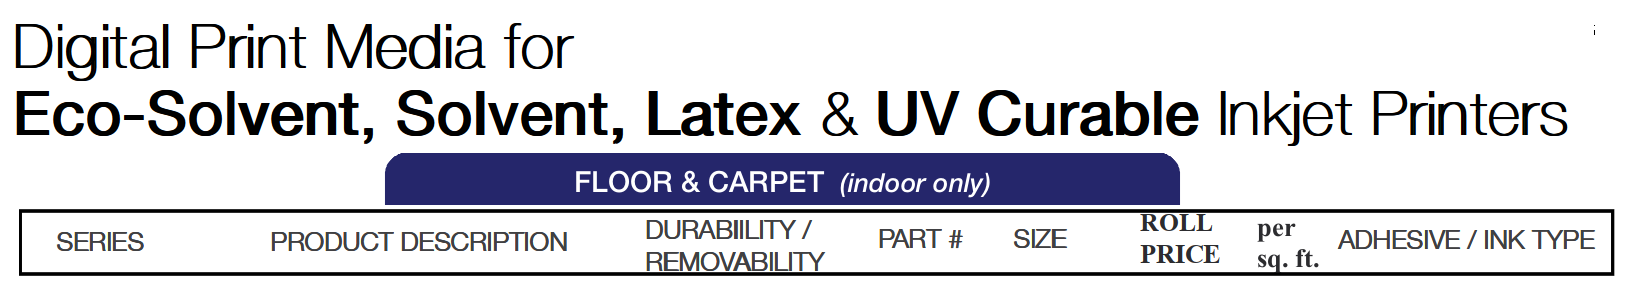 GF floor and carpet mast - Digital Print Media - Floor & Carpet - Indoor only